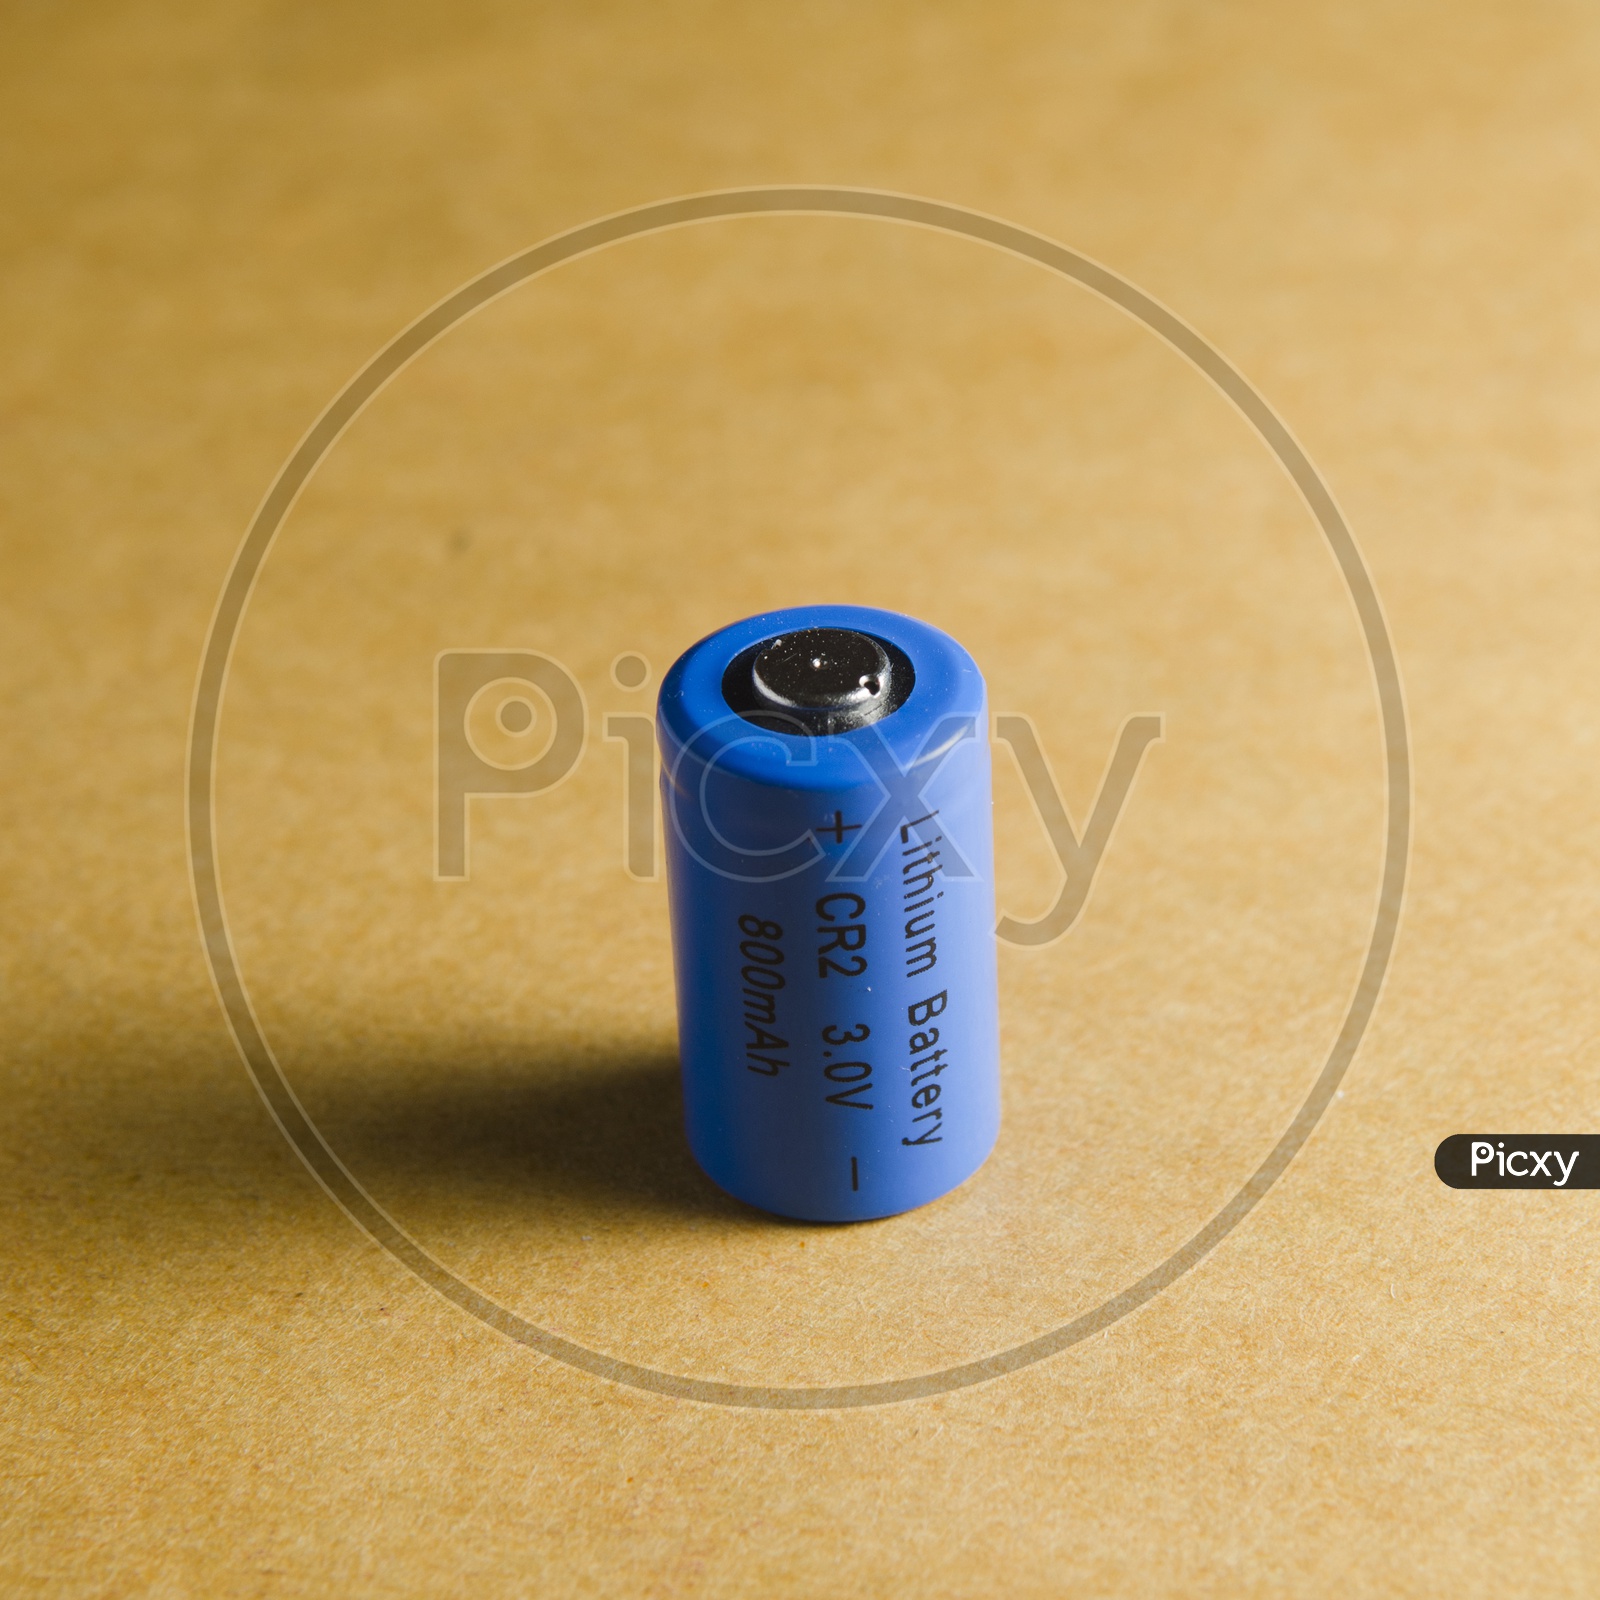 A 800 mah Lithium ion Battery closeup